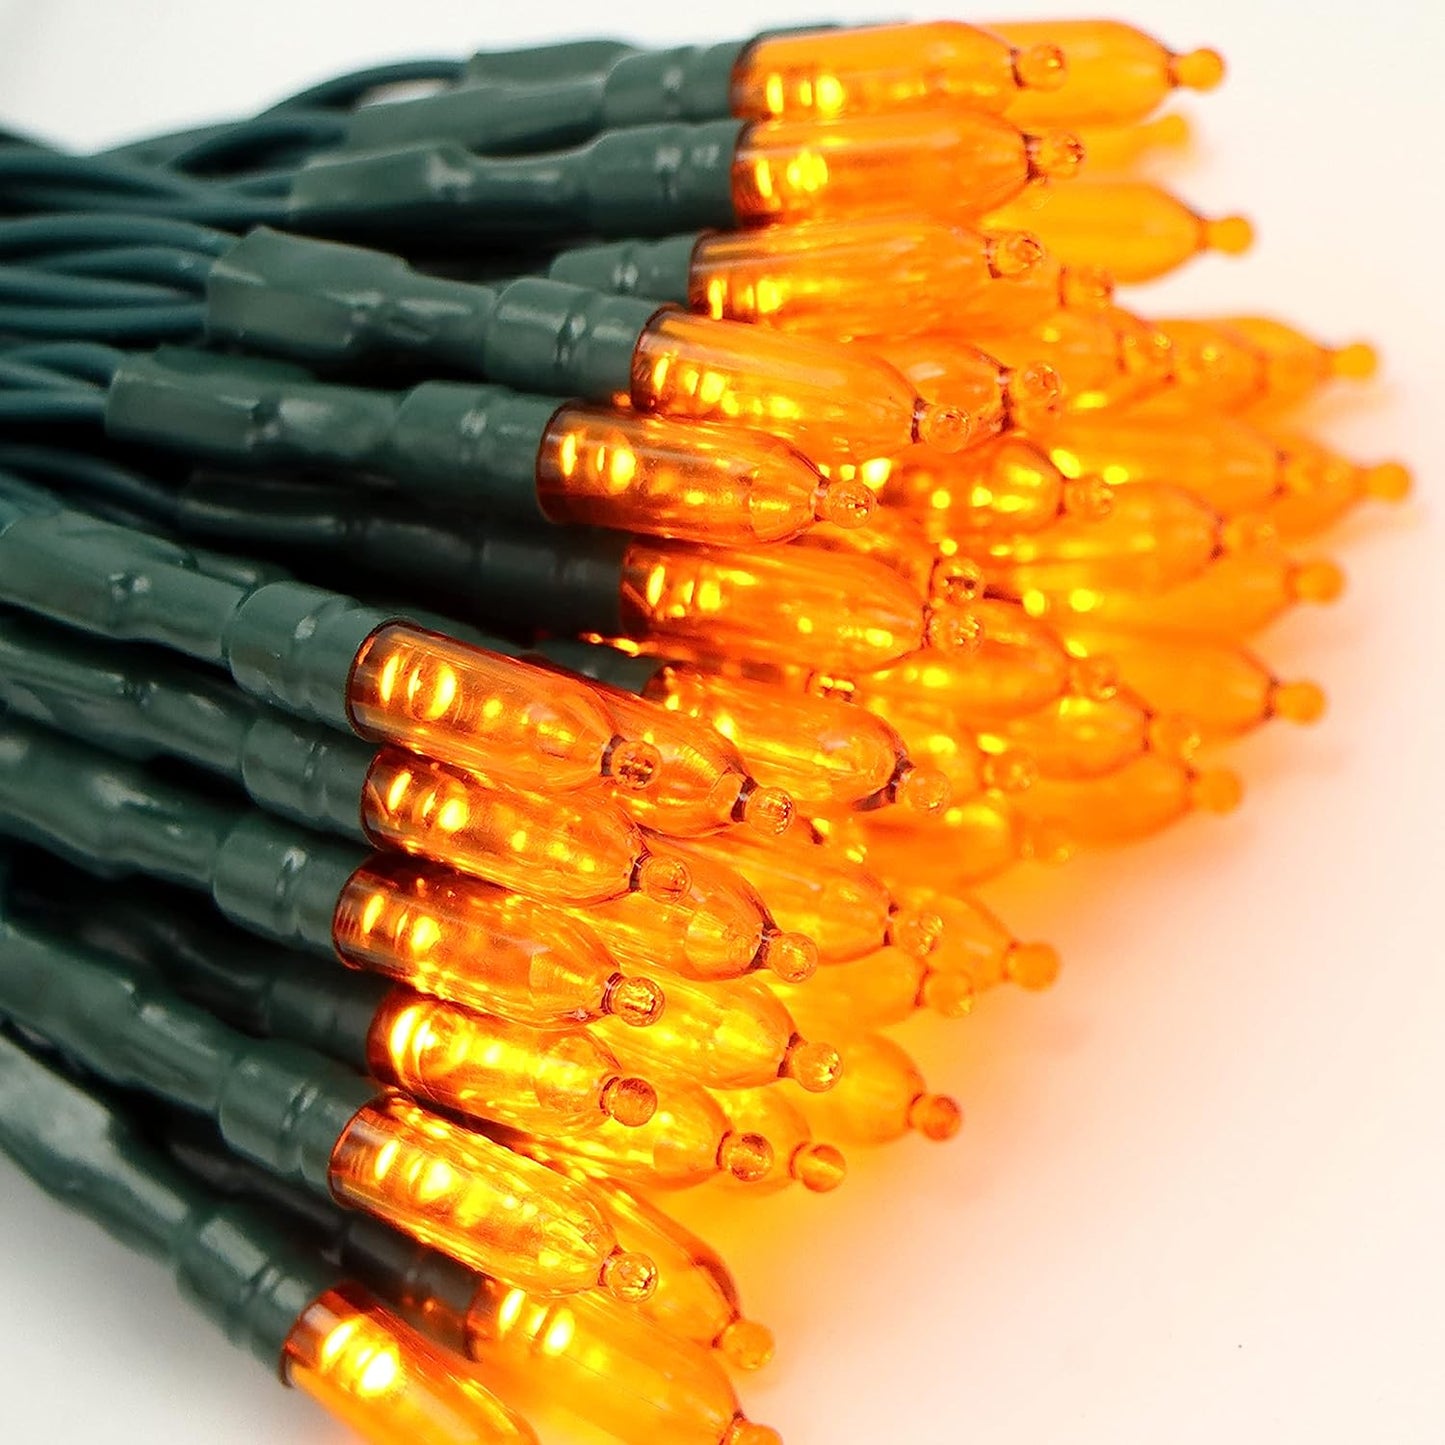 100 Orange LED Green Wire String Lights